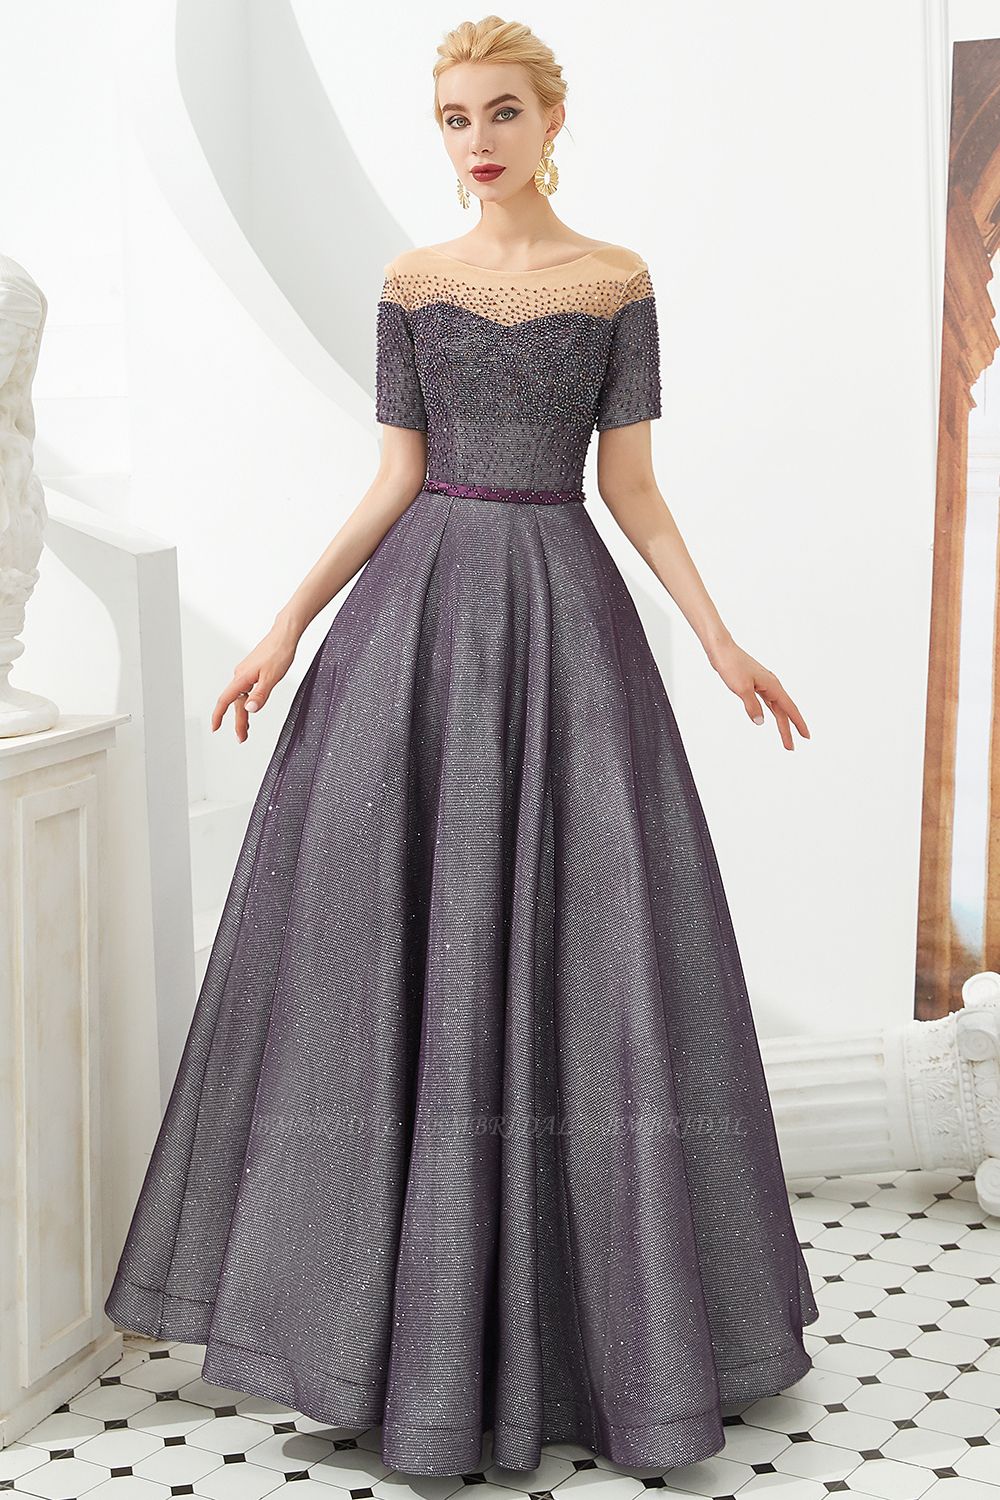 BMbridal Off-the-Shoulder Short Sleeve Beadings Prom Dress Long Lace-up Abendkleider